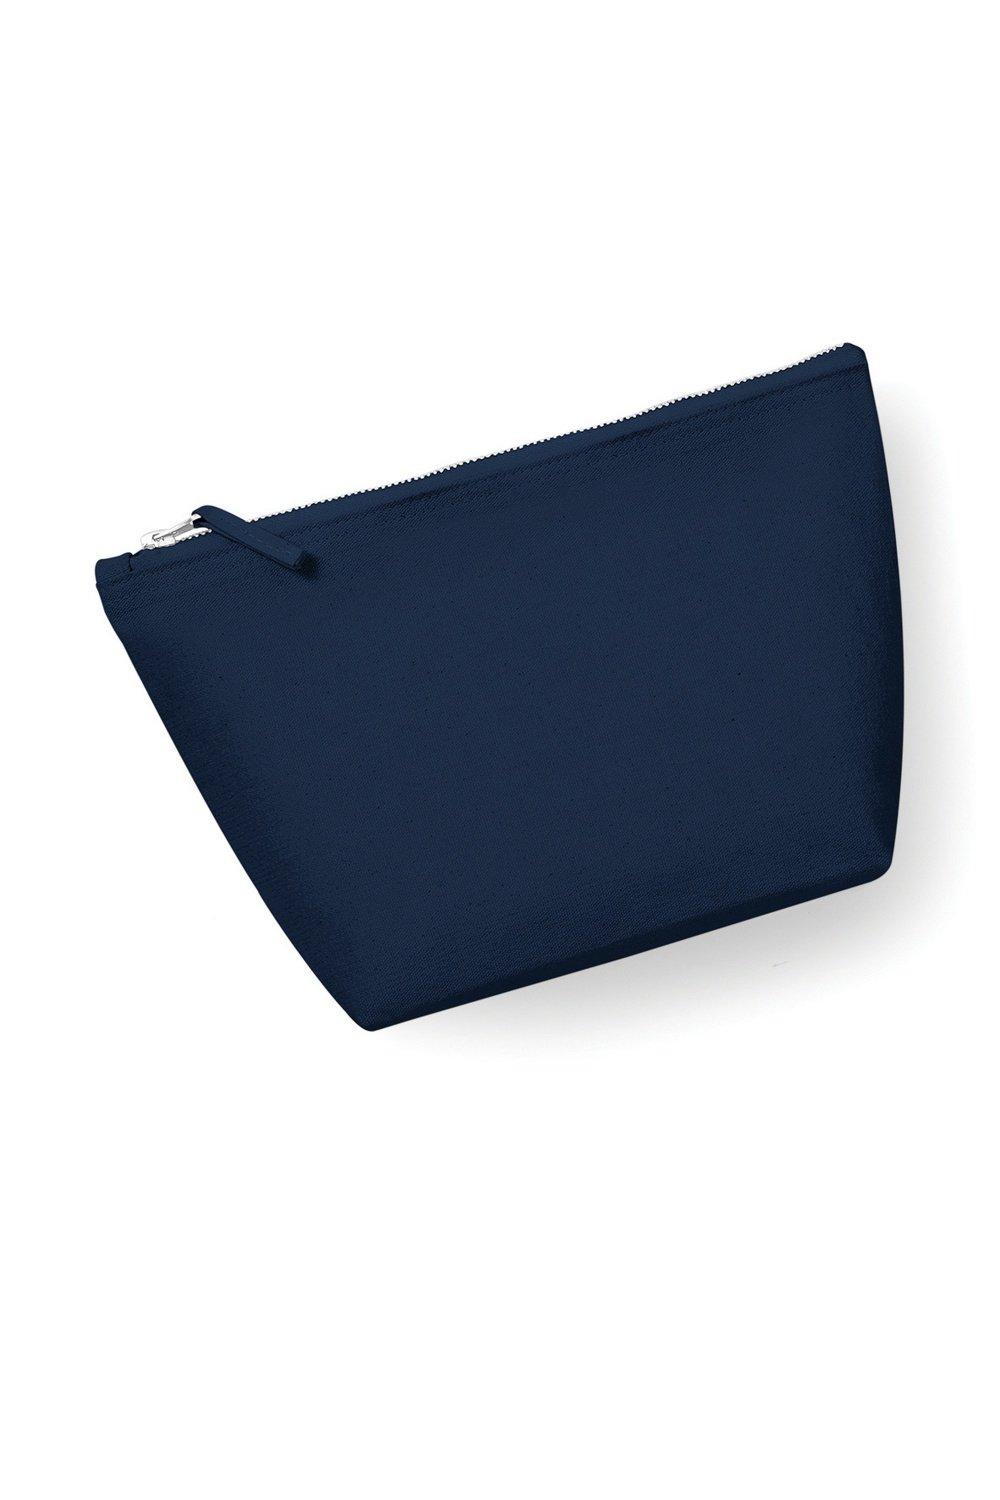 Холщовая сумка для аксессуаров Westford Mill, темно-синий фото